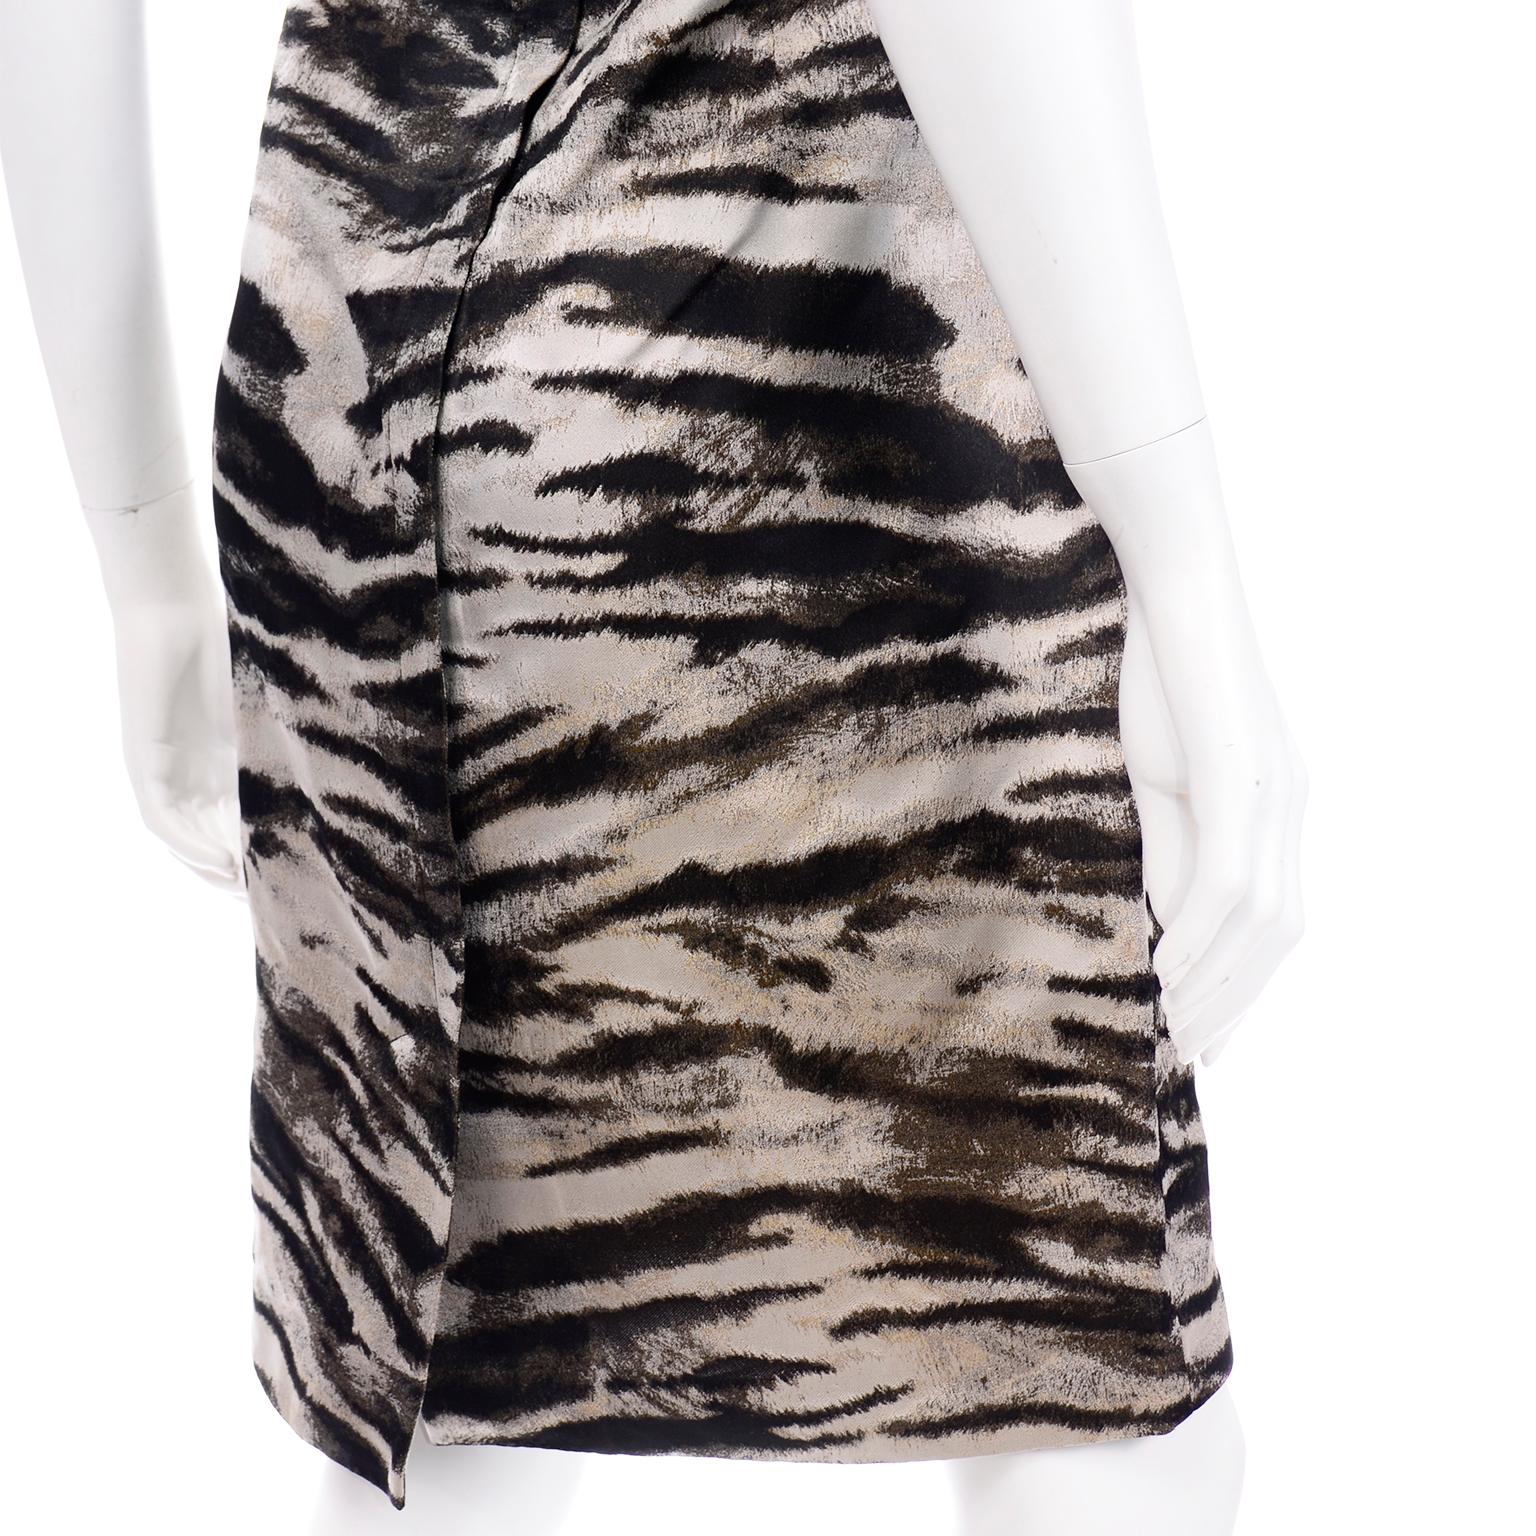 Lanvin 2013 Alber Elbaz Sleeveless Gray & Black Metallic Animal Print Dress For Sale 4